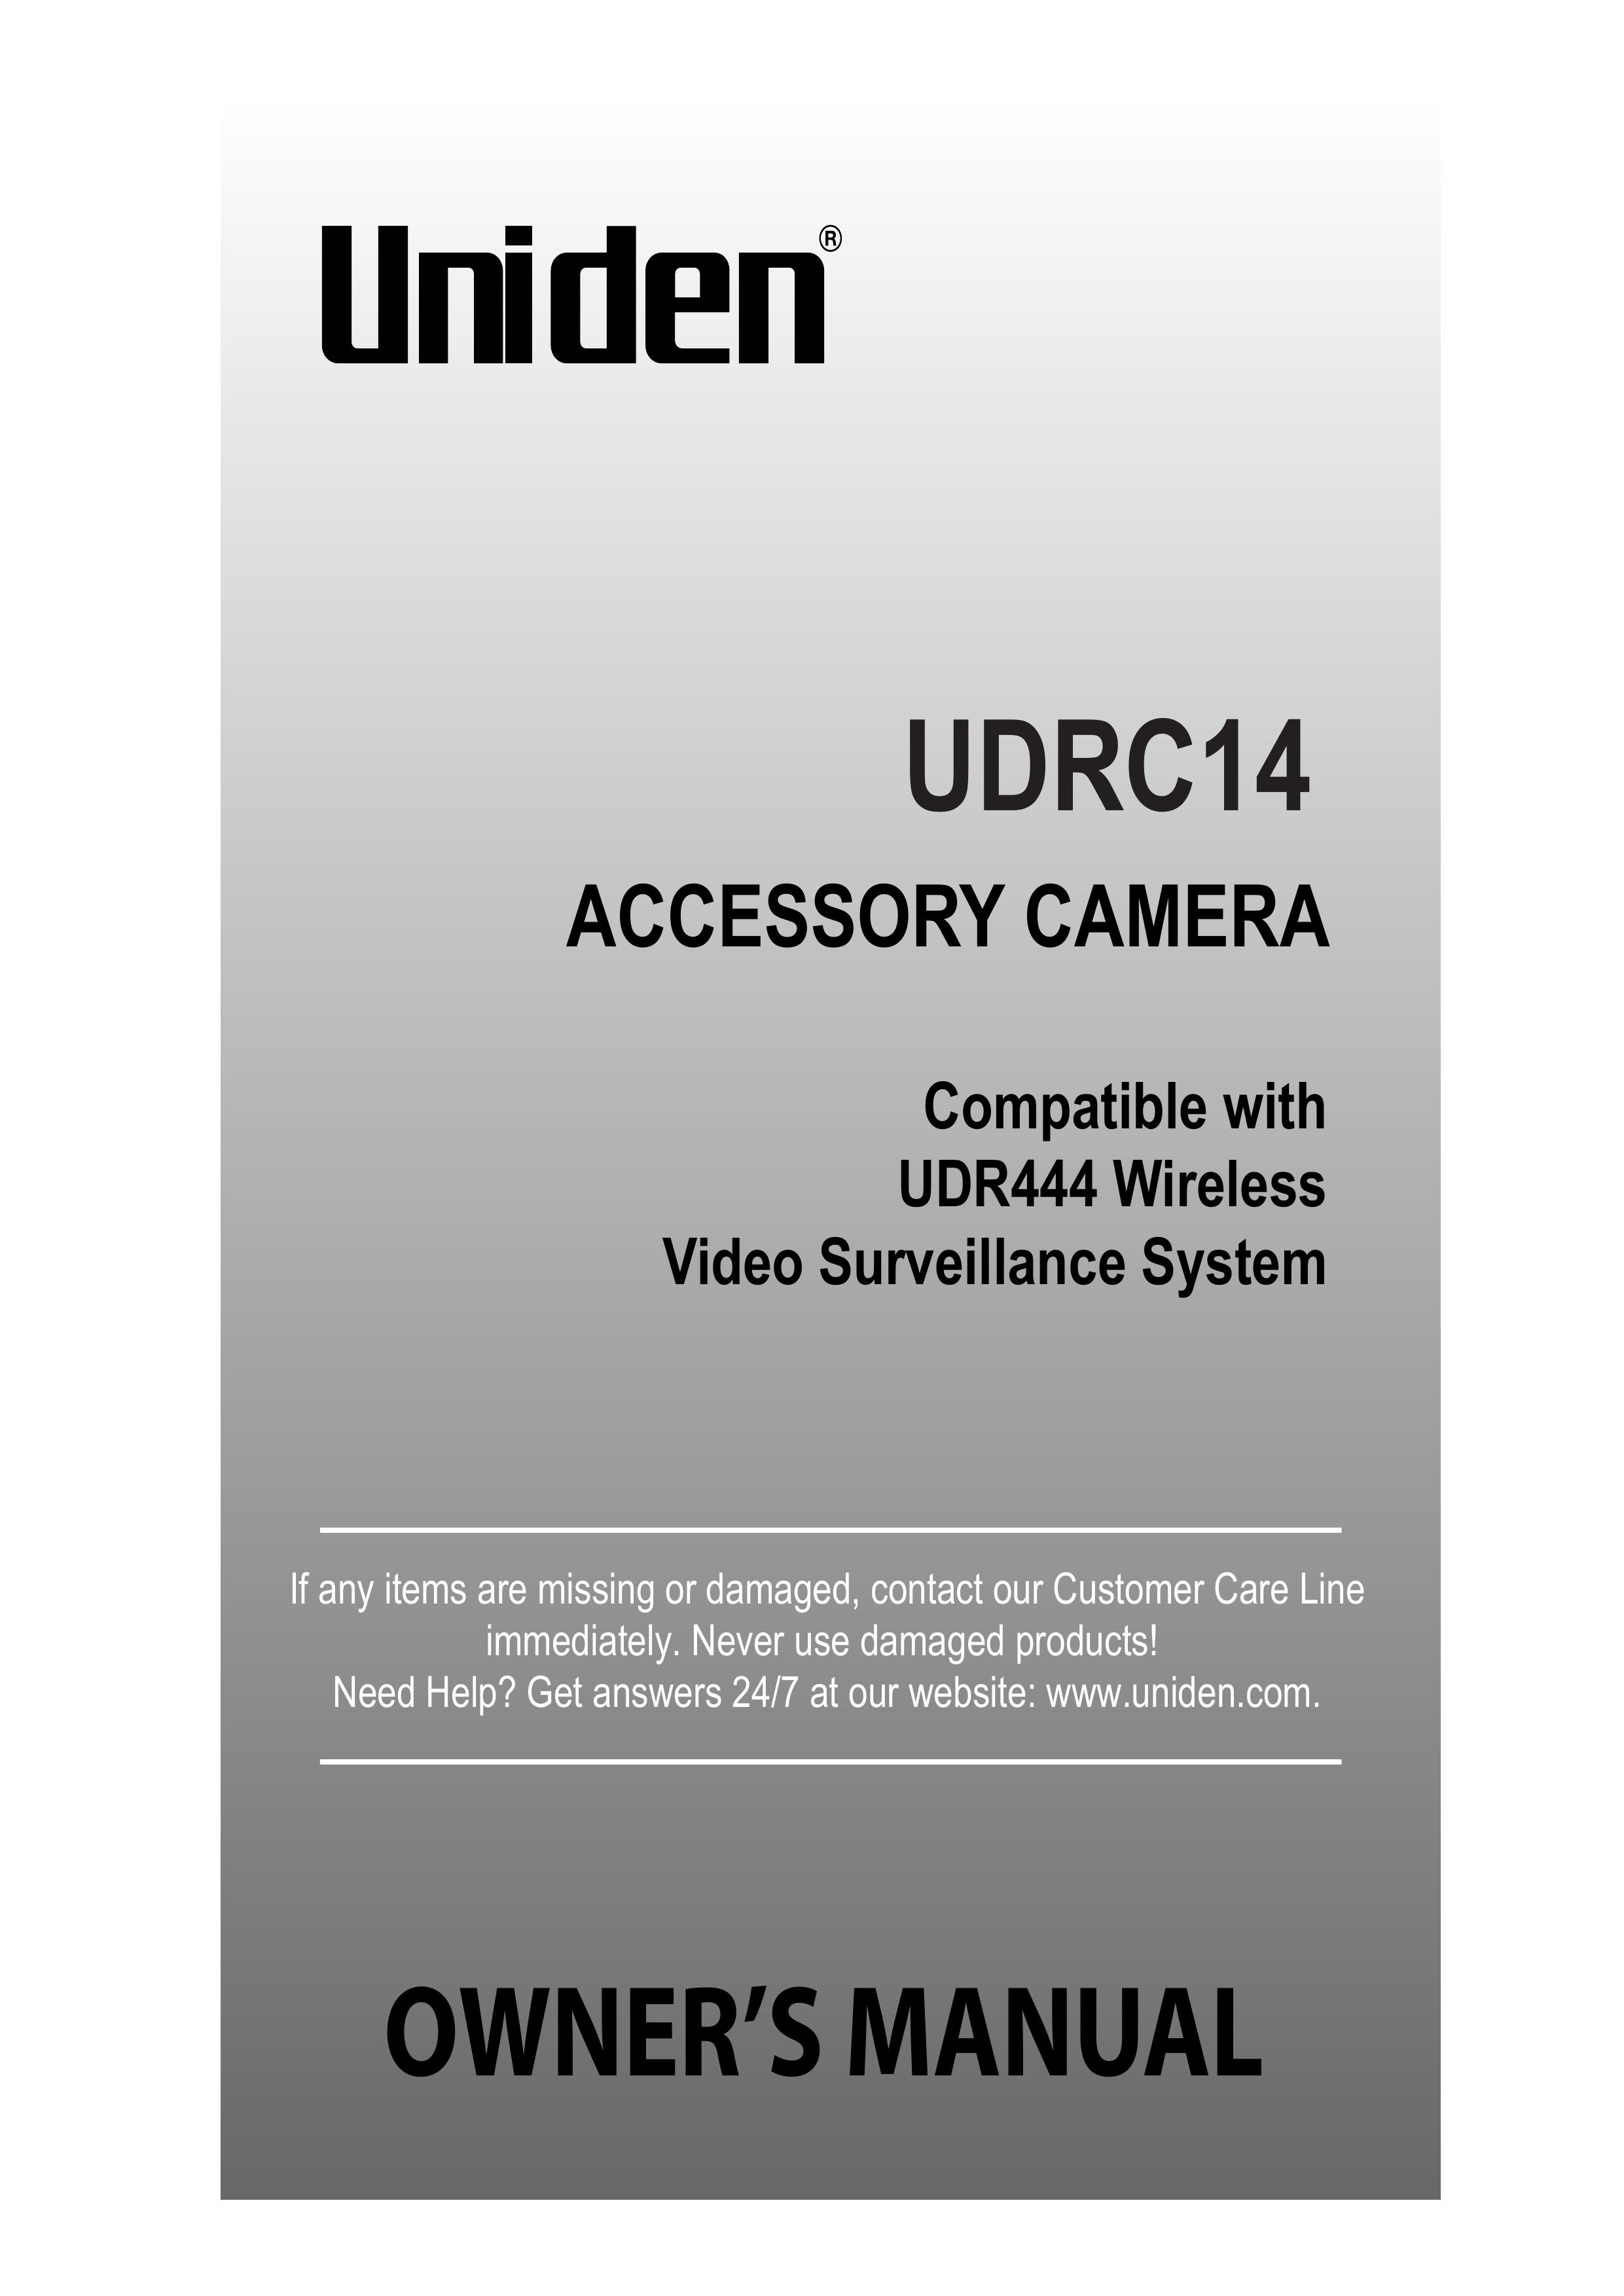 Uniden UDRC14 Security Camera User Manual